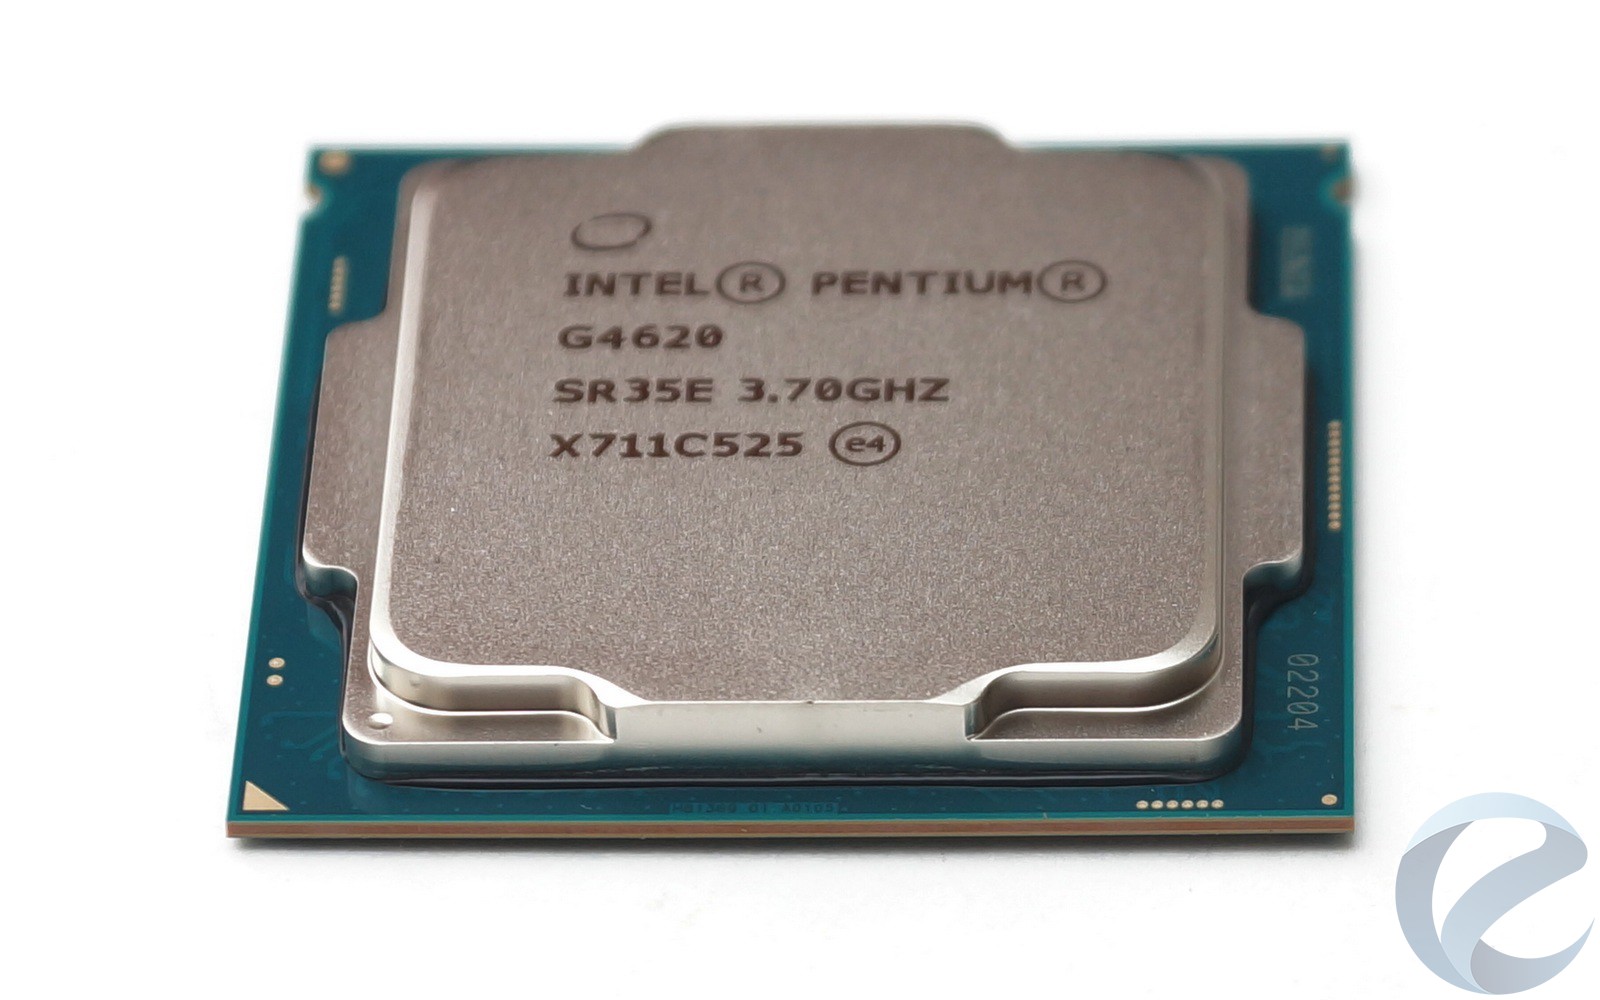 Intel Pentium g4560. Интел пентиум g4560. Intel Pentium g4650. Pentium g840. Intel g4620